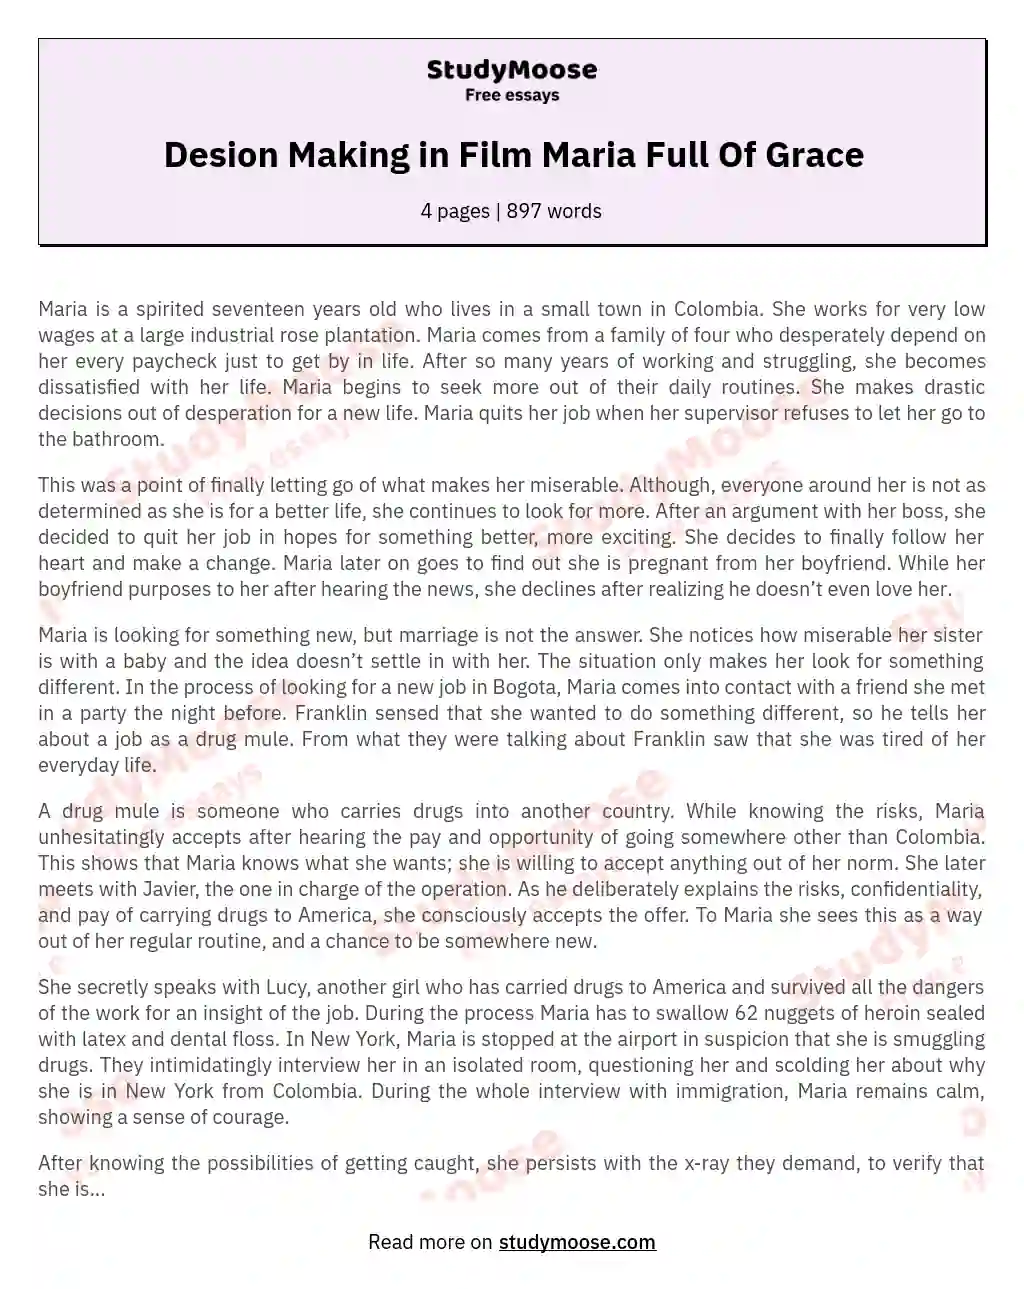 Desion Making in Film Maria Full Of Grace essay